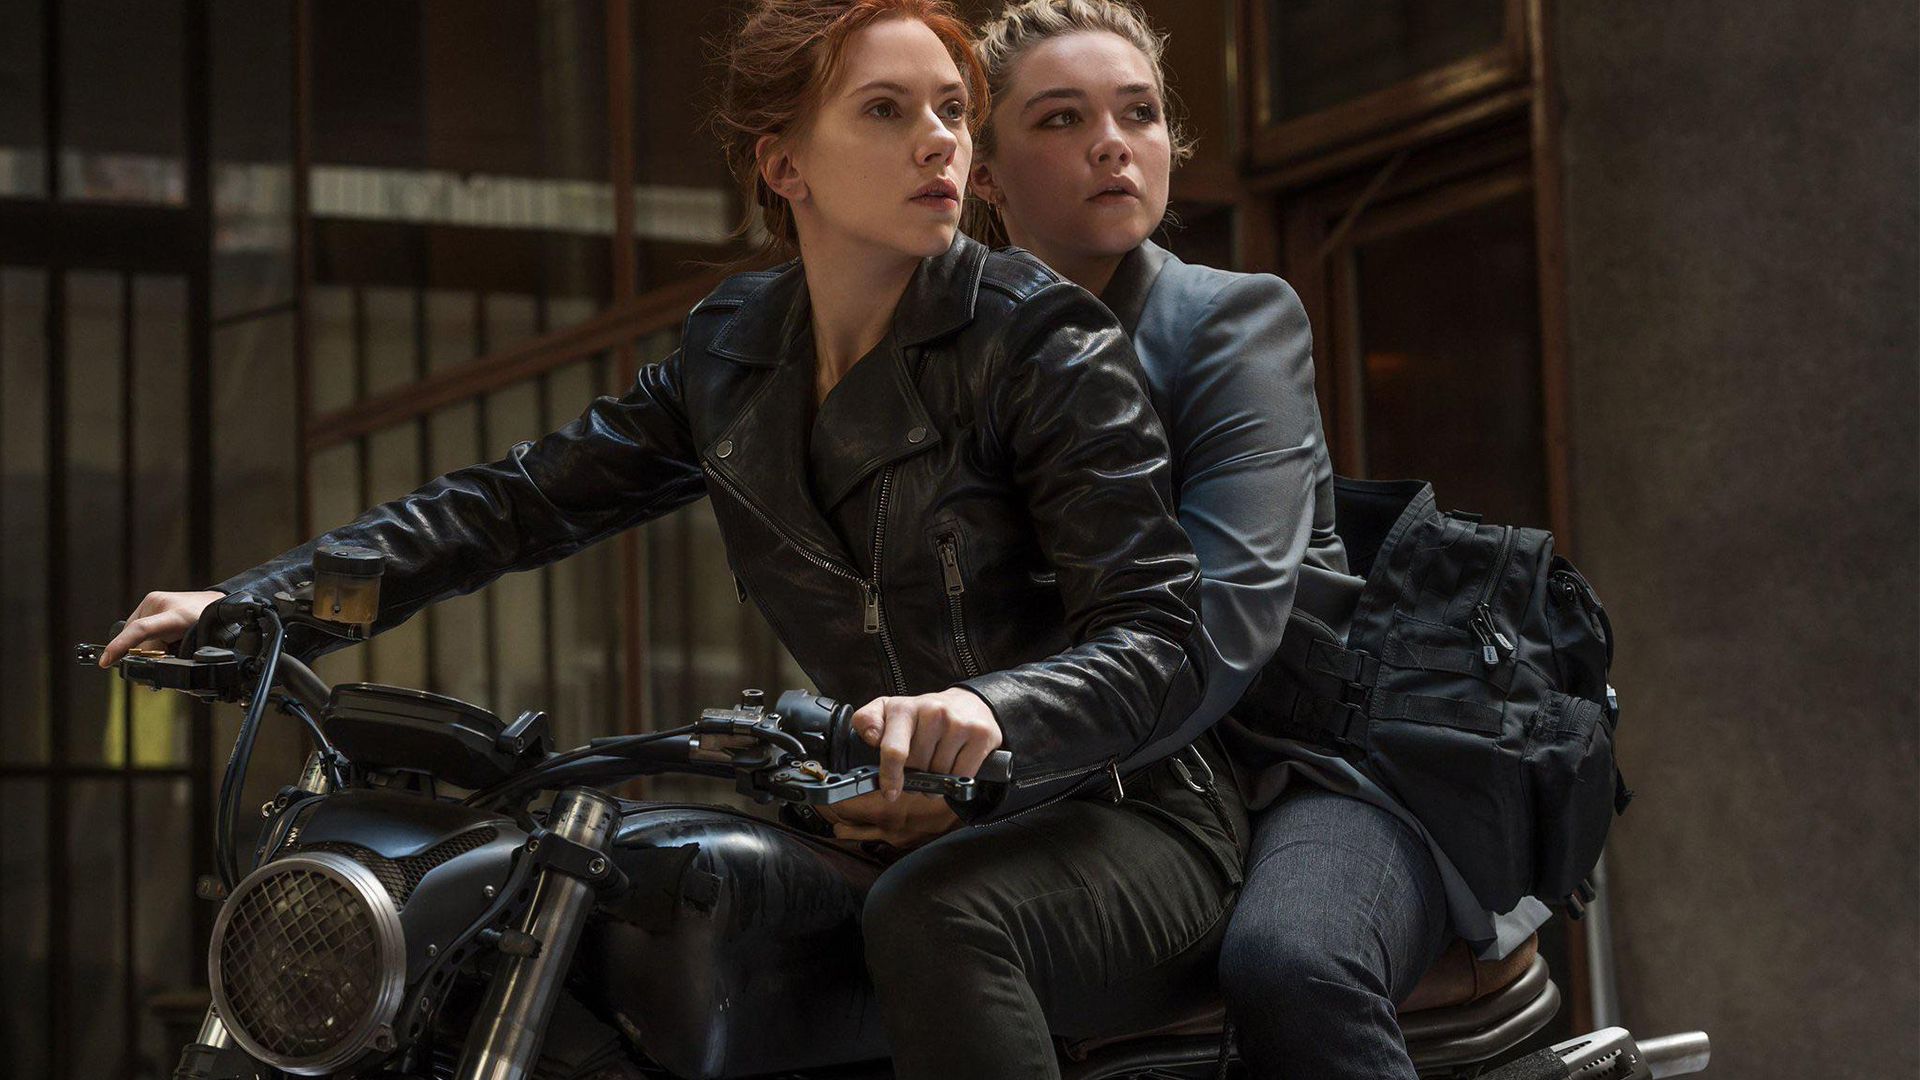 اسکارلت جوهانسون در نقش ناتاشا رومانوف و فلورنس پیو در نقش یلنا بلووا سوار موتور در فیلم Black Widow